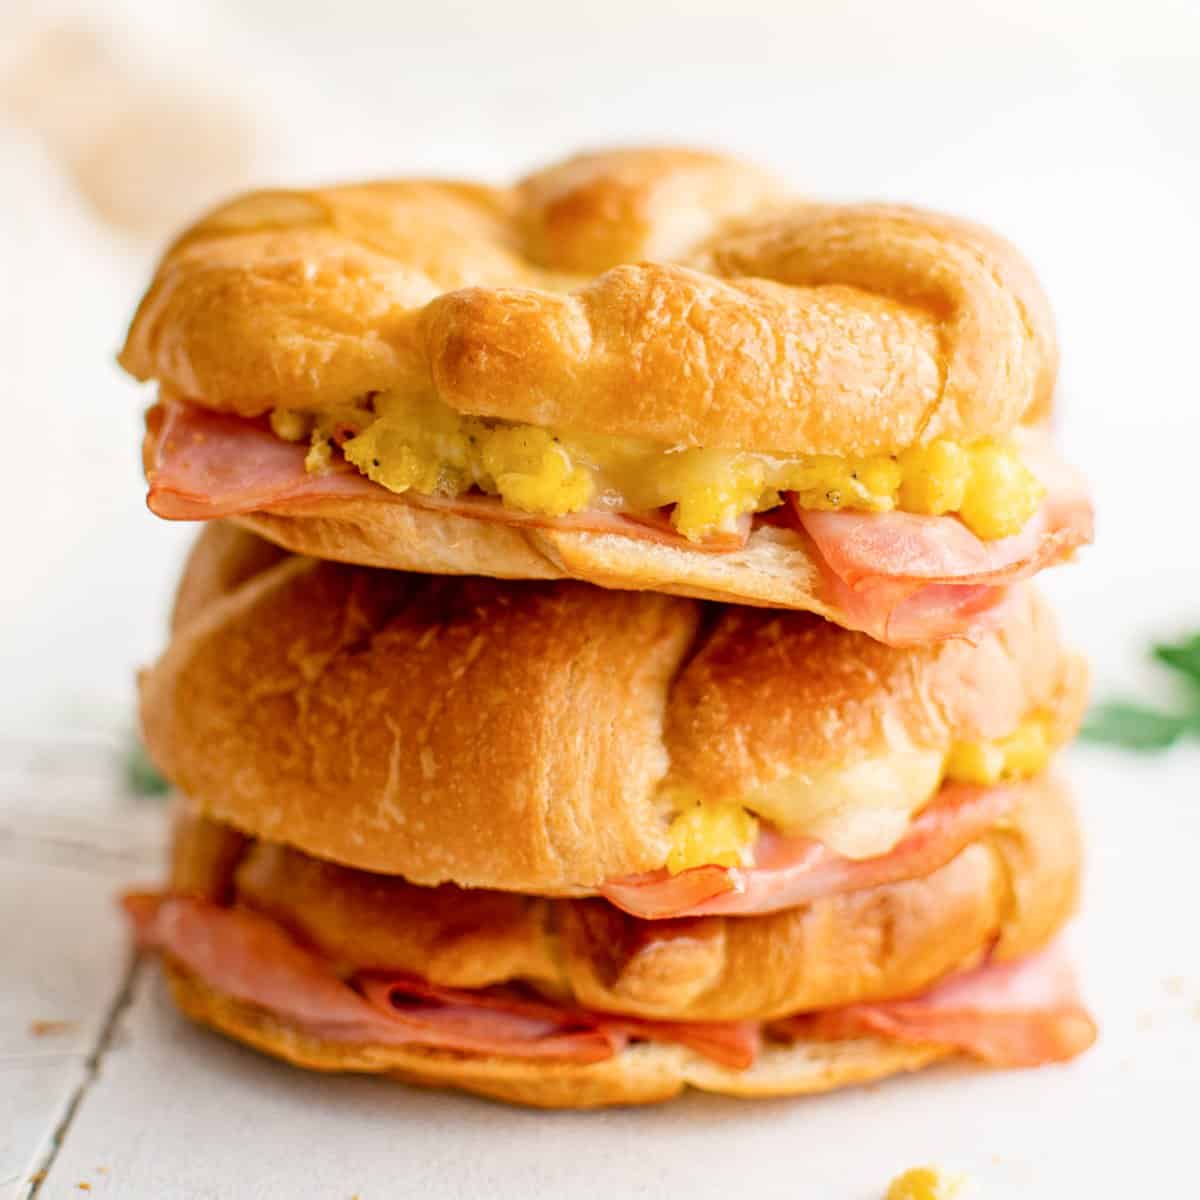 https://www.thecookierookie.com/wp-content/uploads/2022/05/Featured-Breakfast-Croissant-Sandwiches-1.jpg